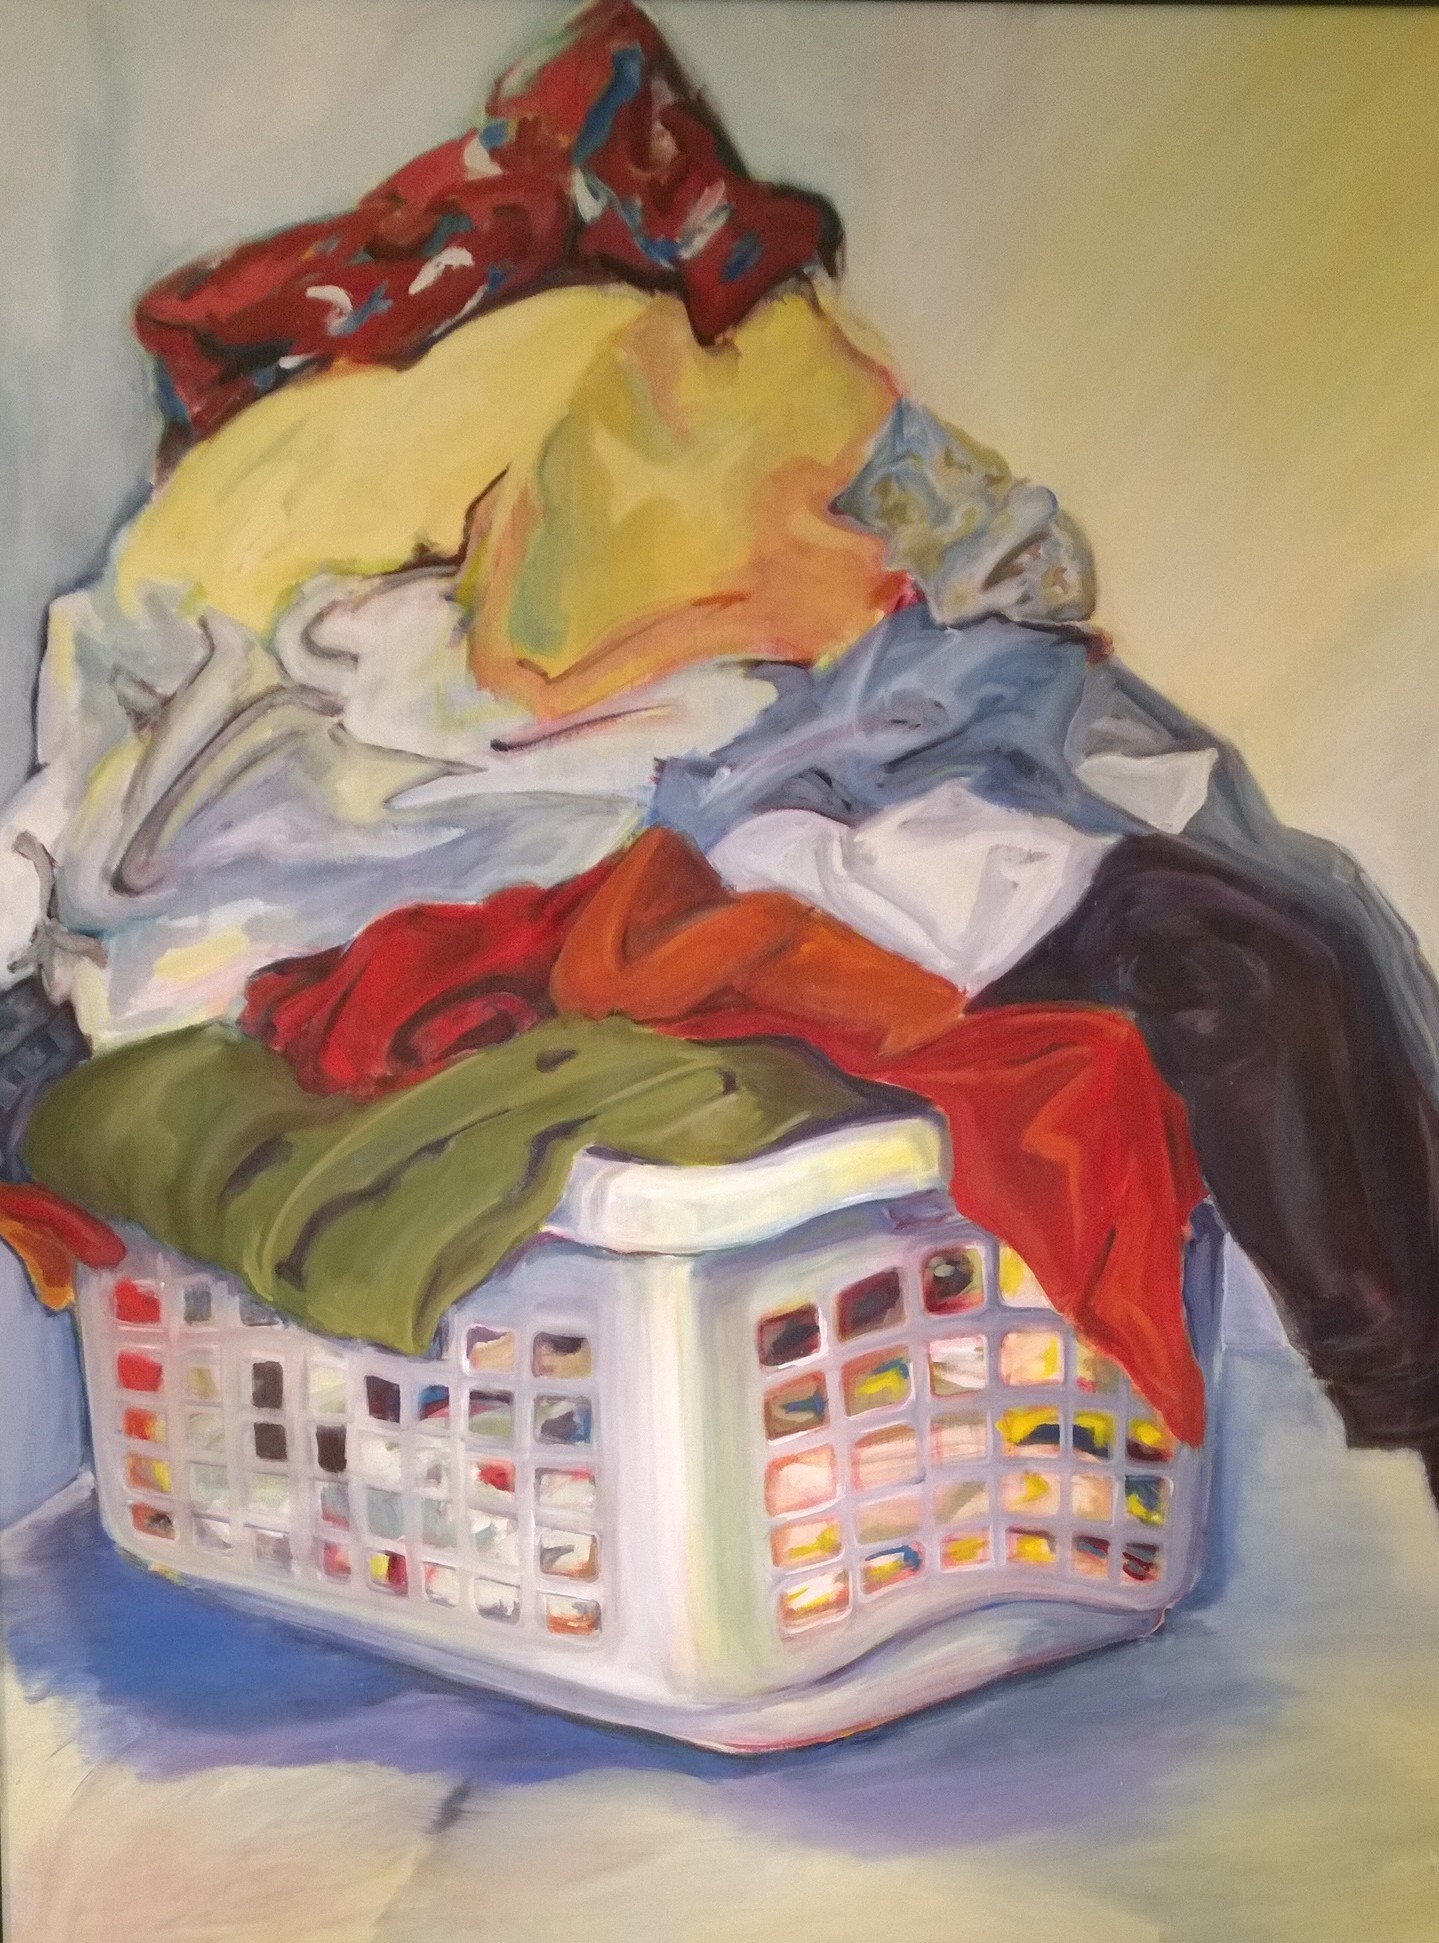  Laundry Cycle: Regular Wash